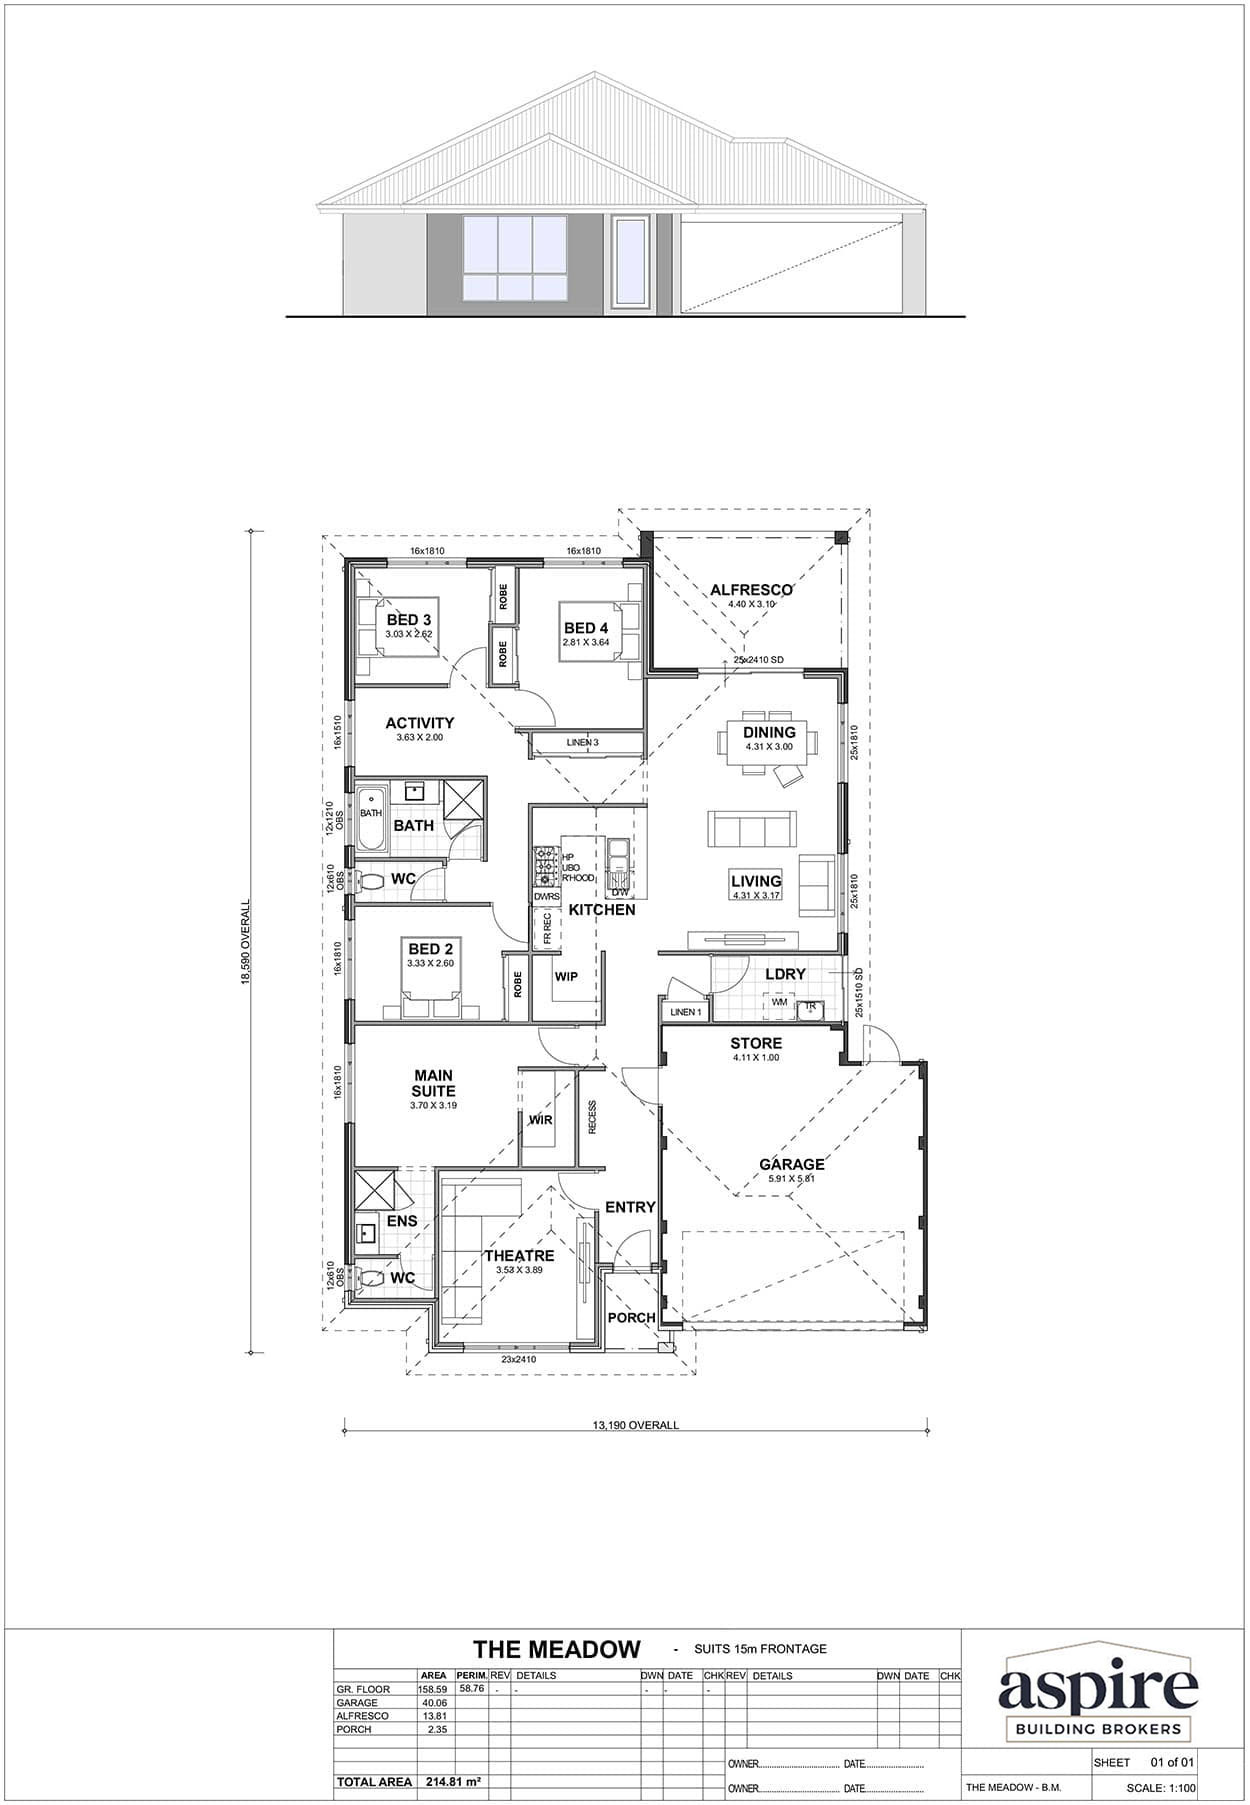 The Meadow Floor Plan - Perth New Build Home Designs. 4 Bedrooms and 15m Block Width. Aspire Building Brokers